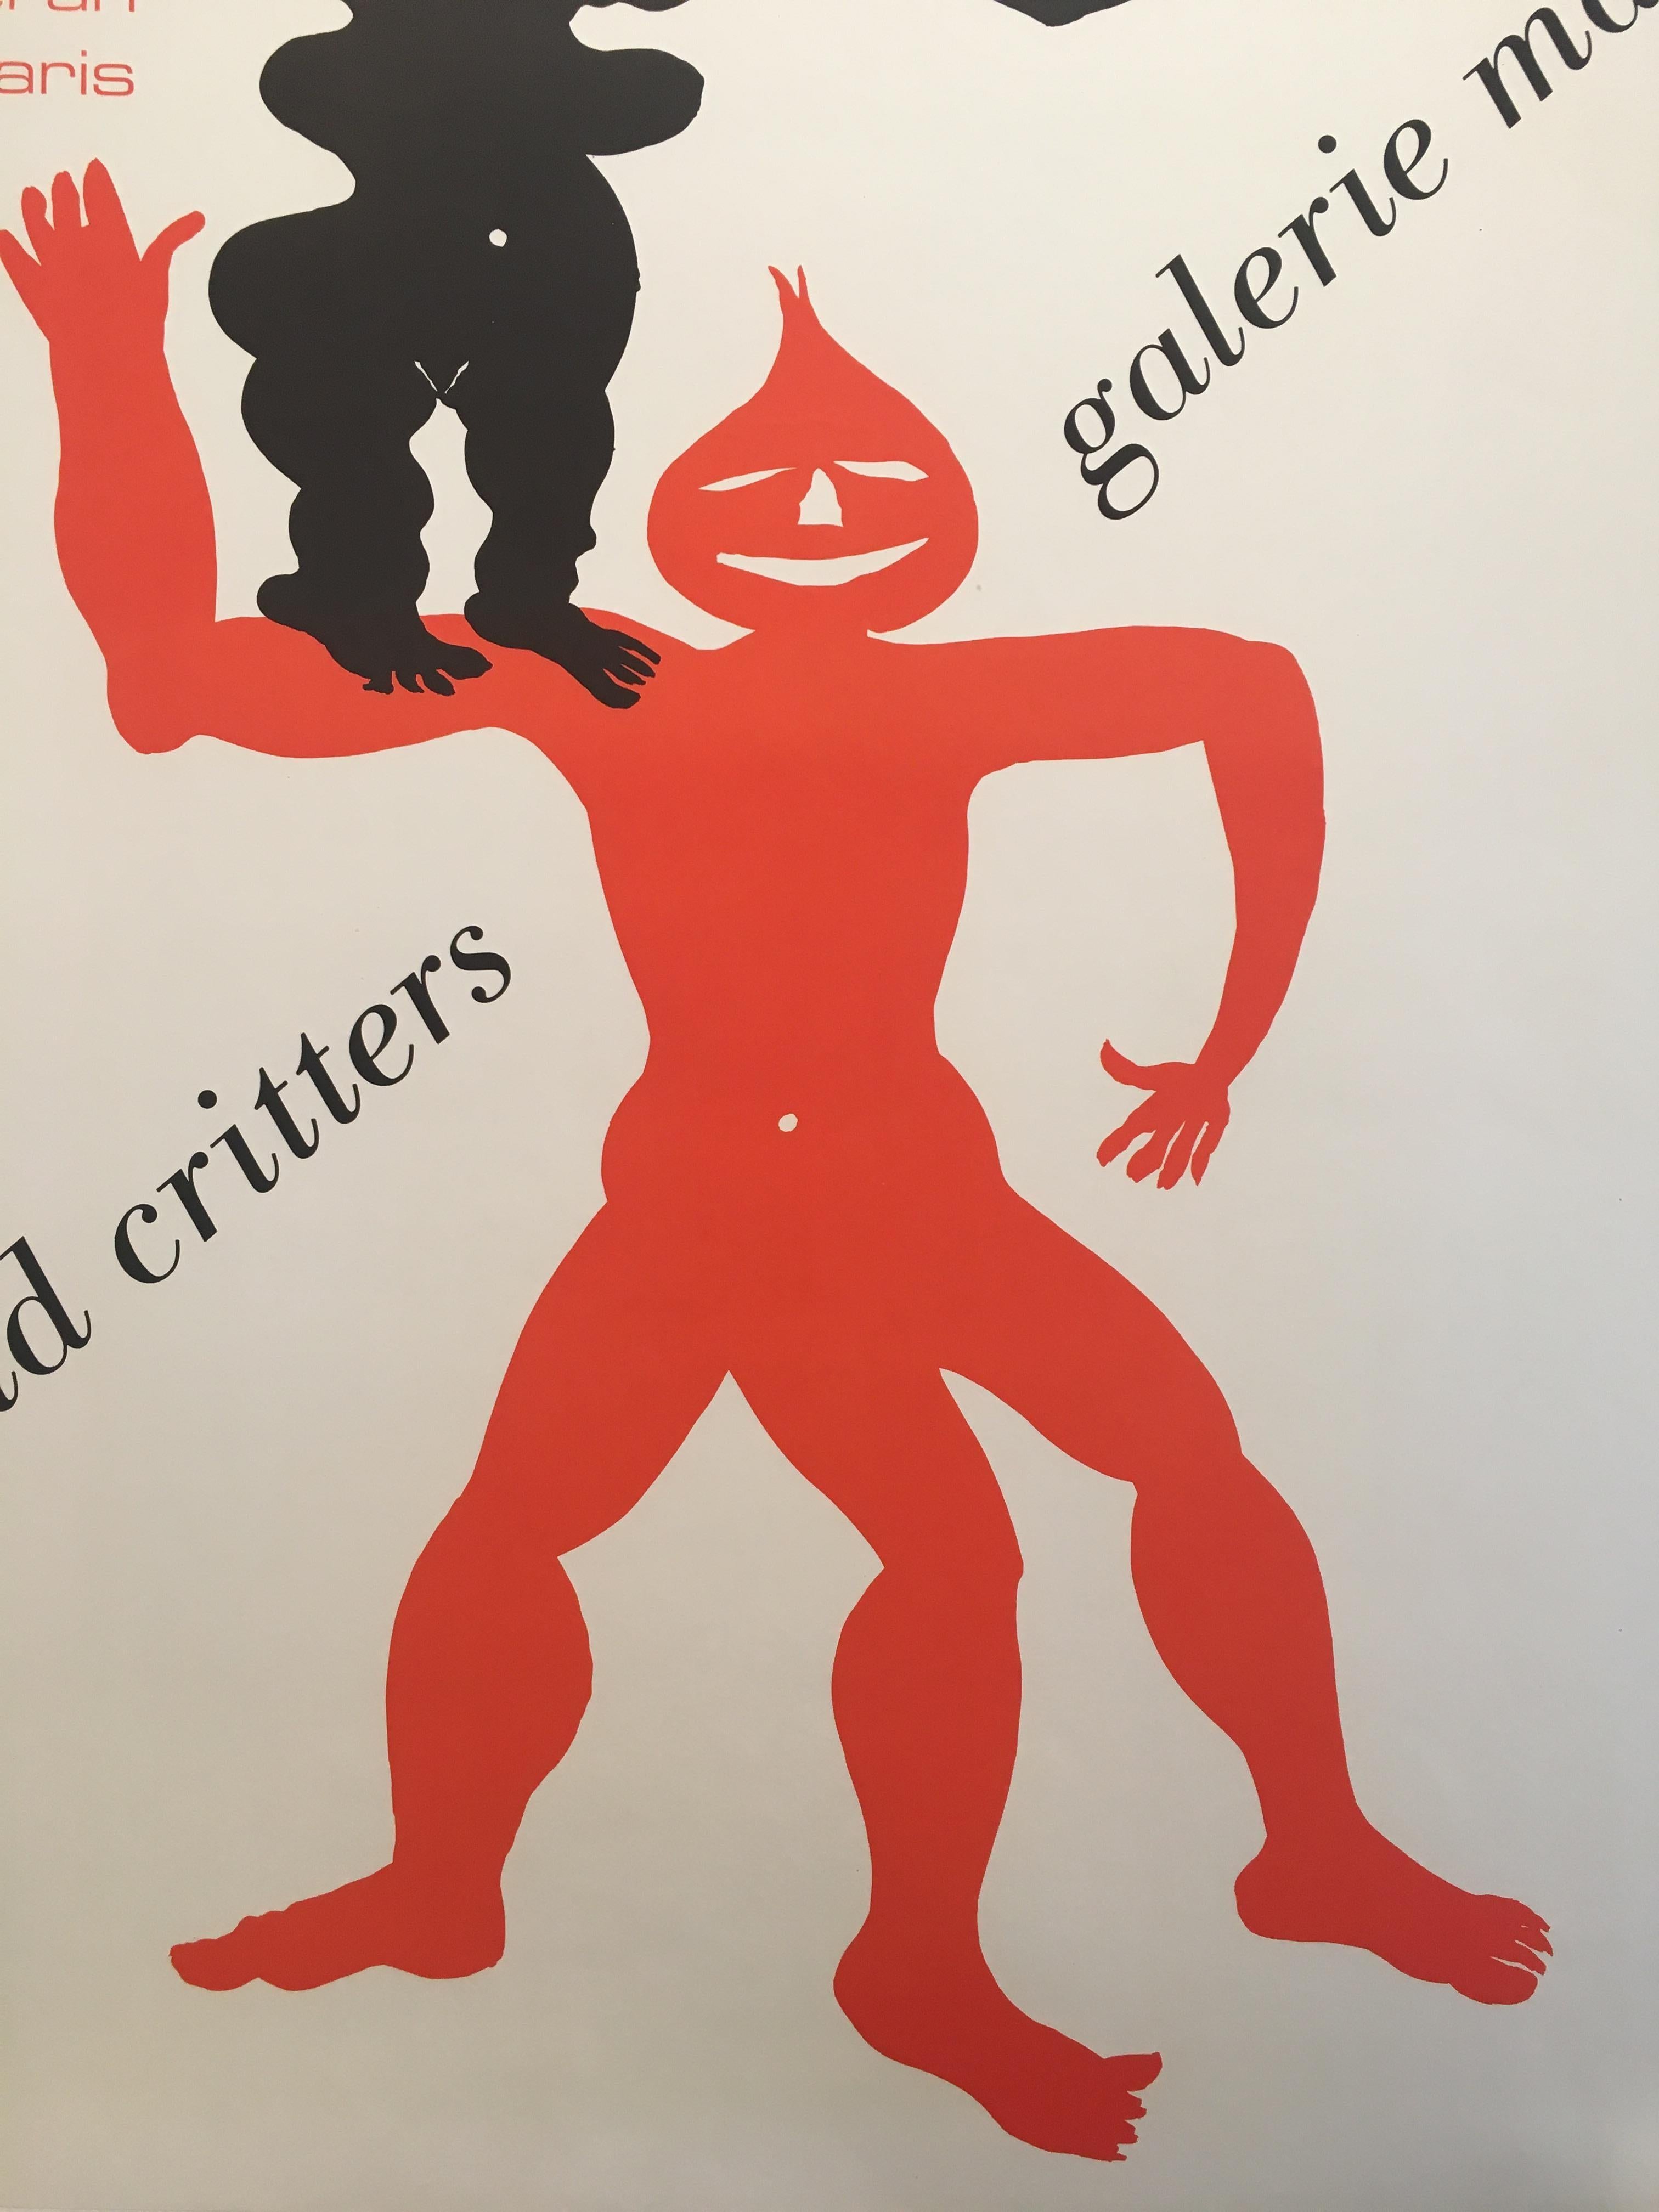 Affiche originale vintage, 'Calder Crags and Critters' 1975 Galerie Maeght

